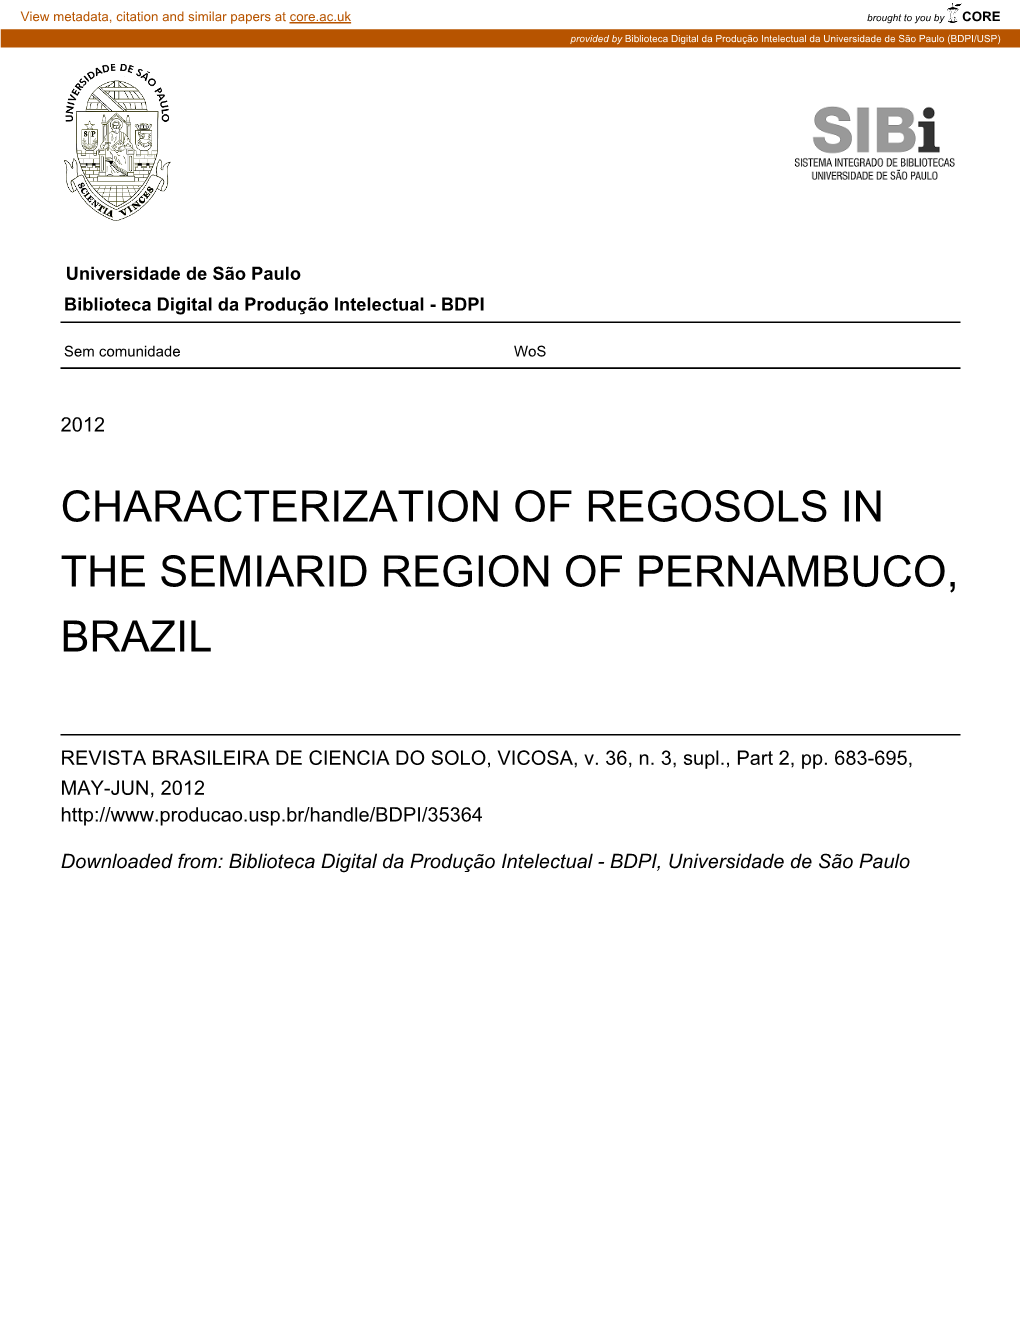 Characterization of Regosols in the Semiarid Region of Pernambuco, Brazil